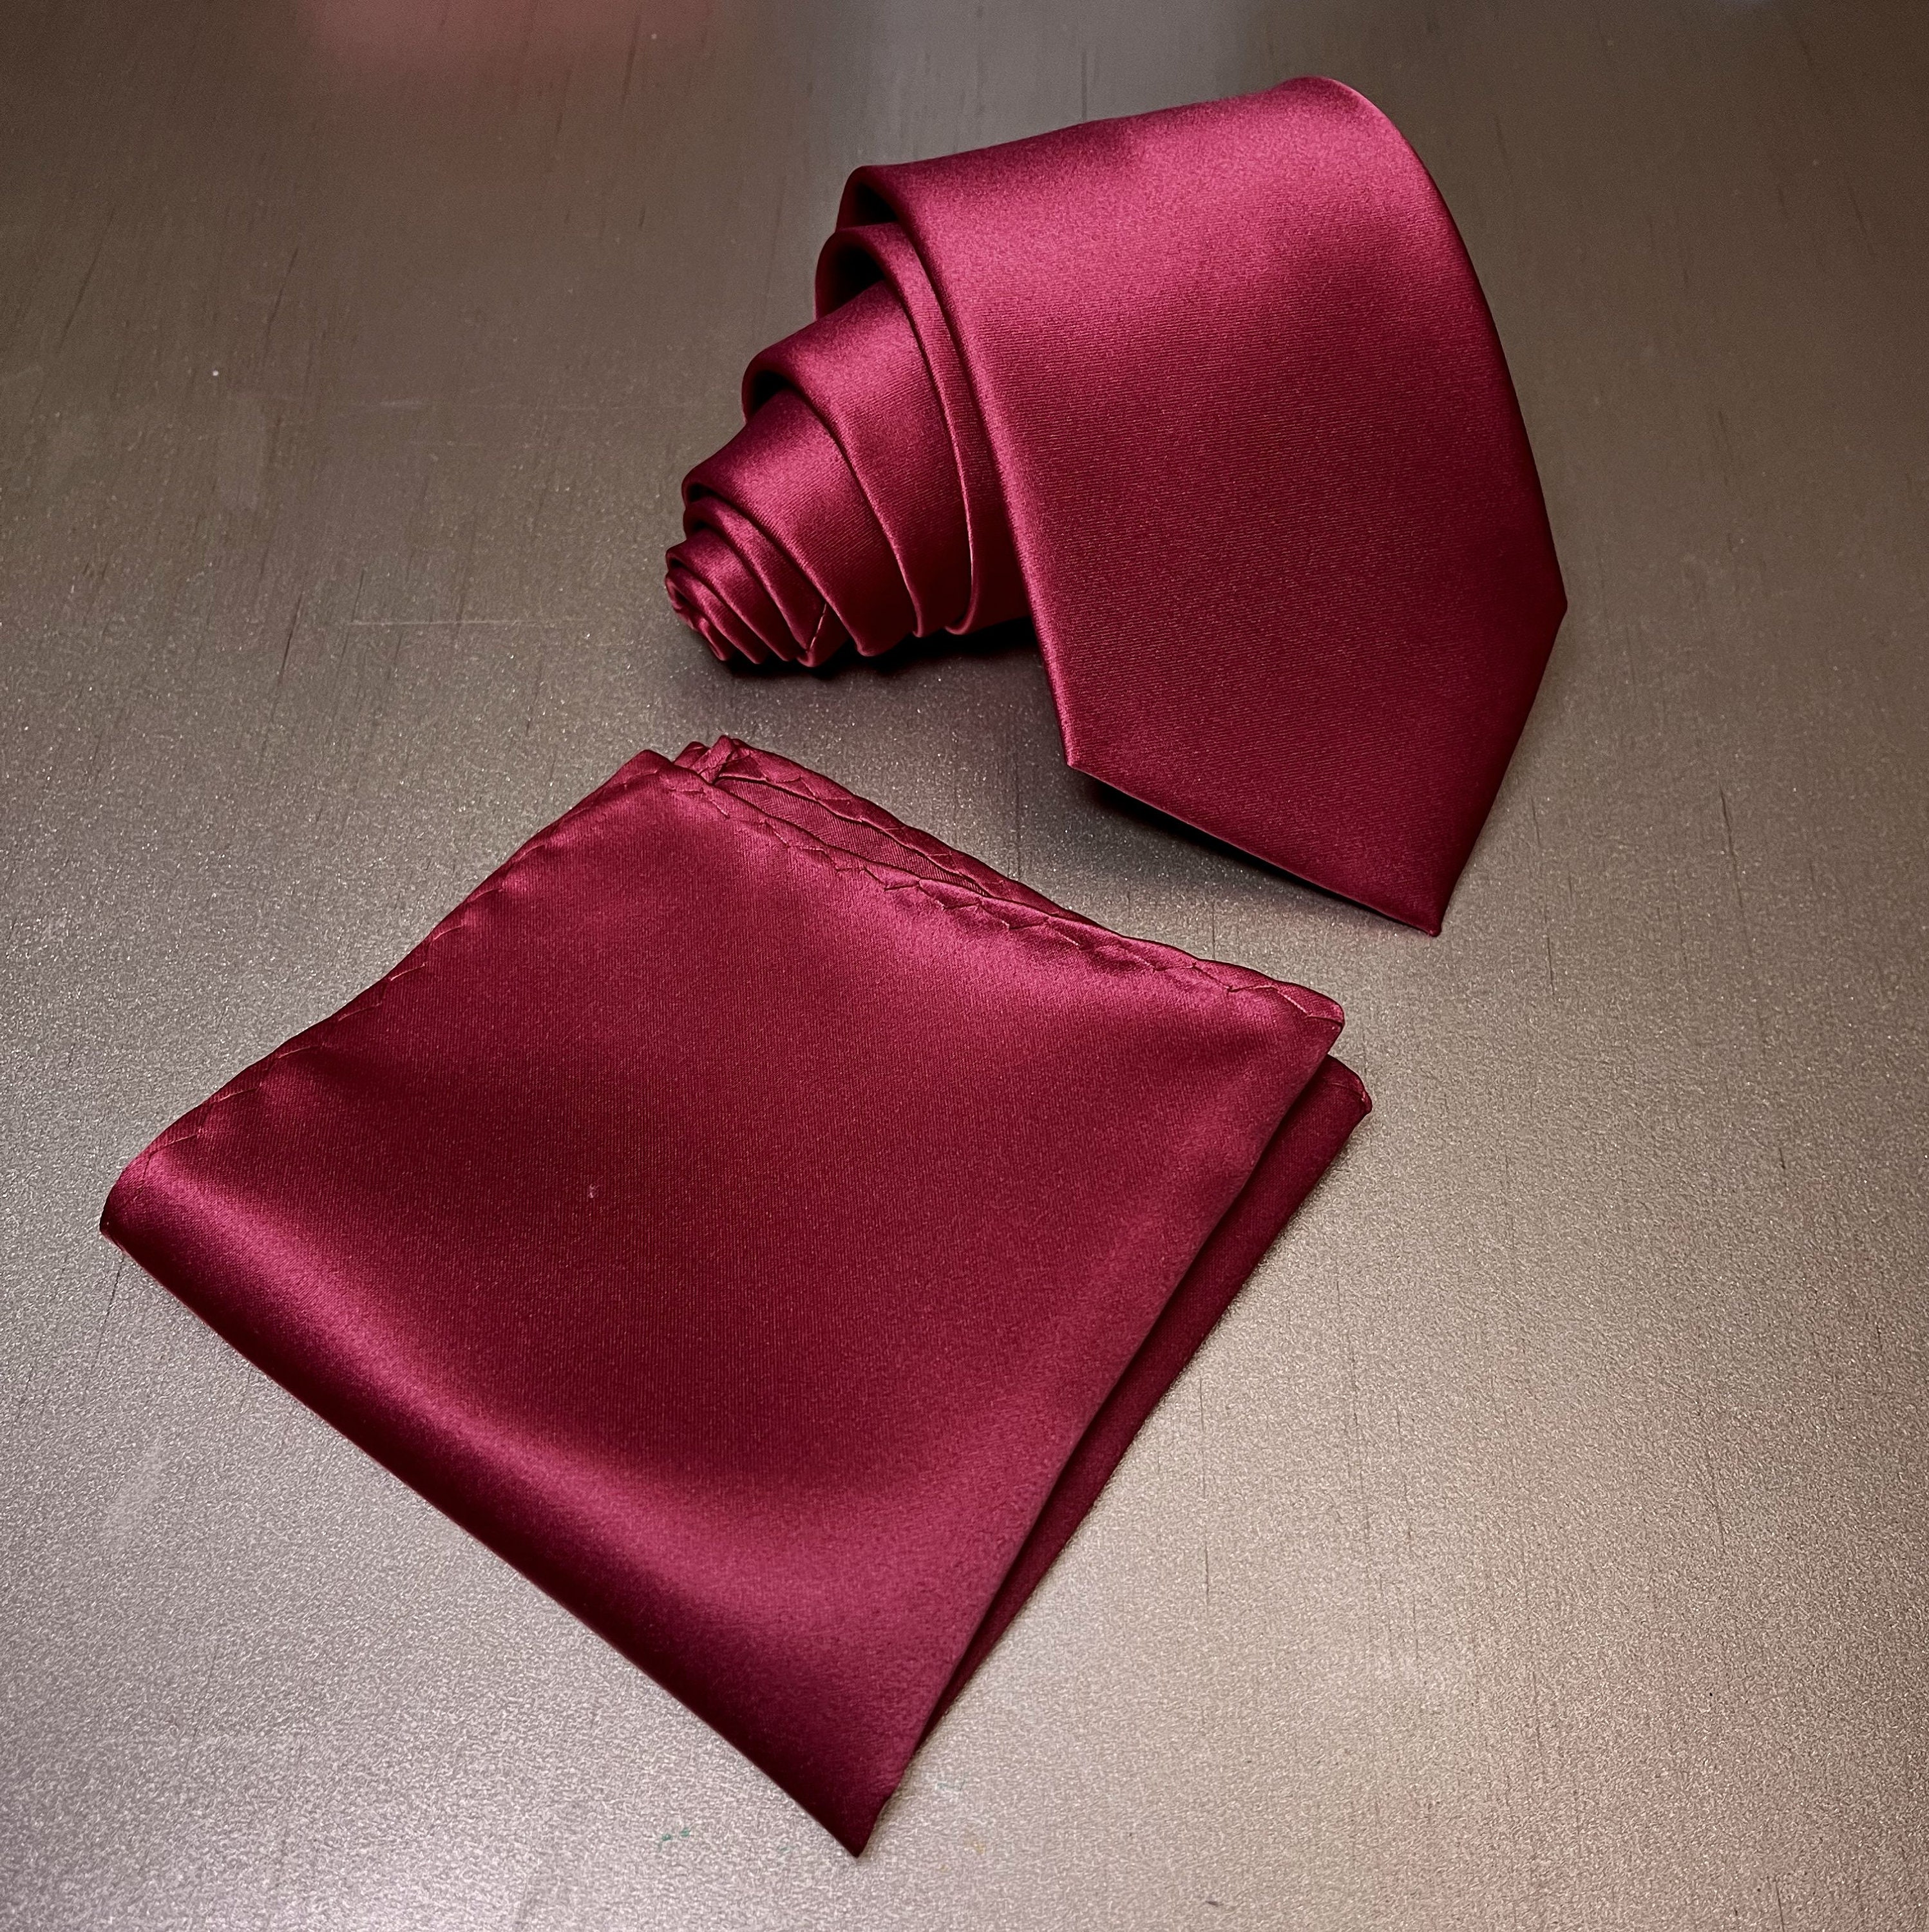 Burgundy Tissue Paper Sheets, Bulk Maroon Tissue Paper, Premium